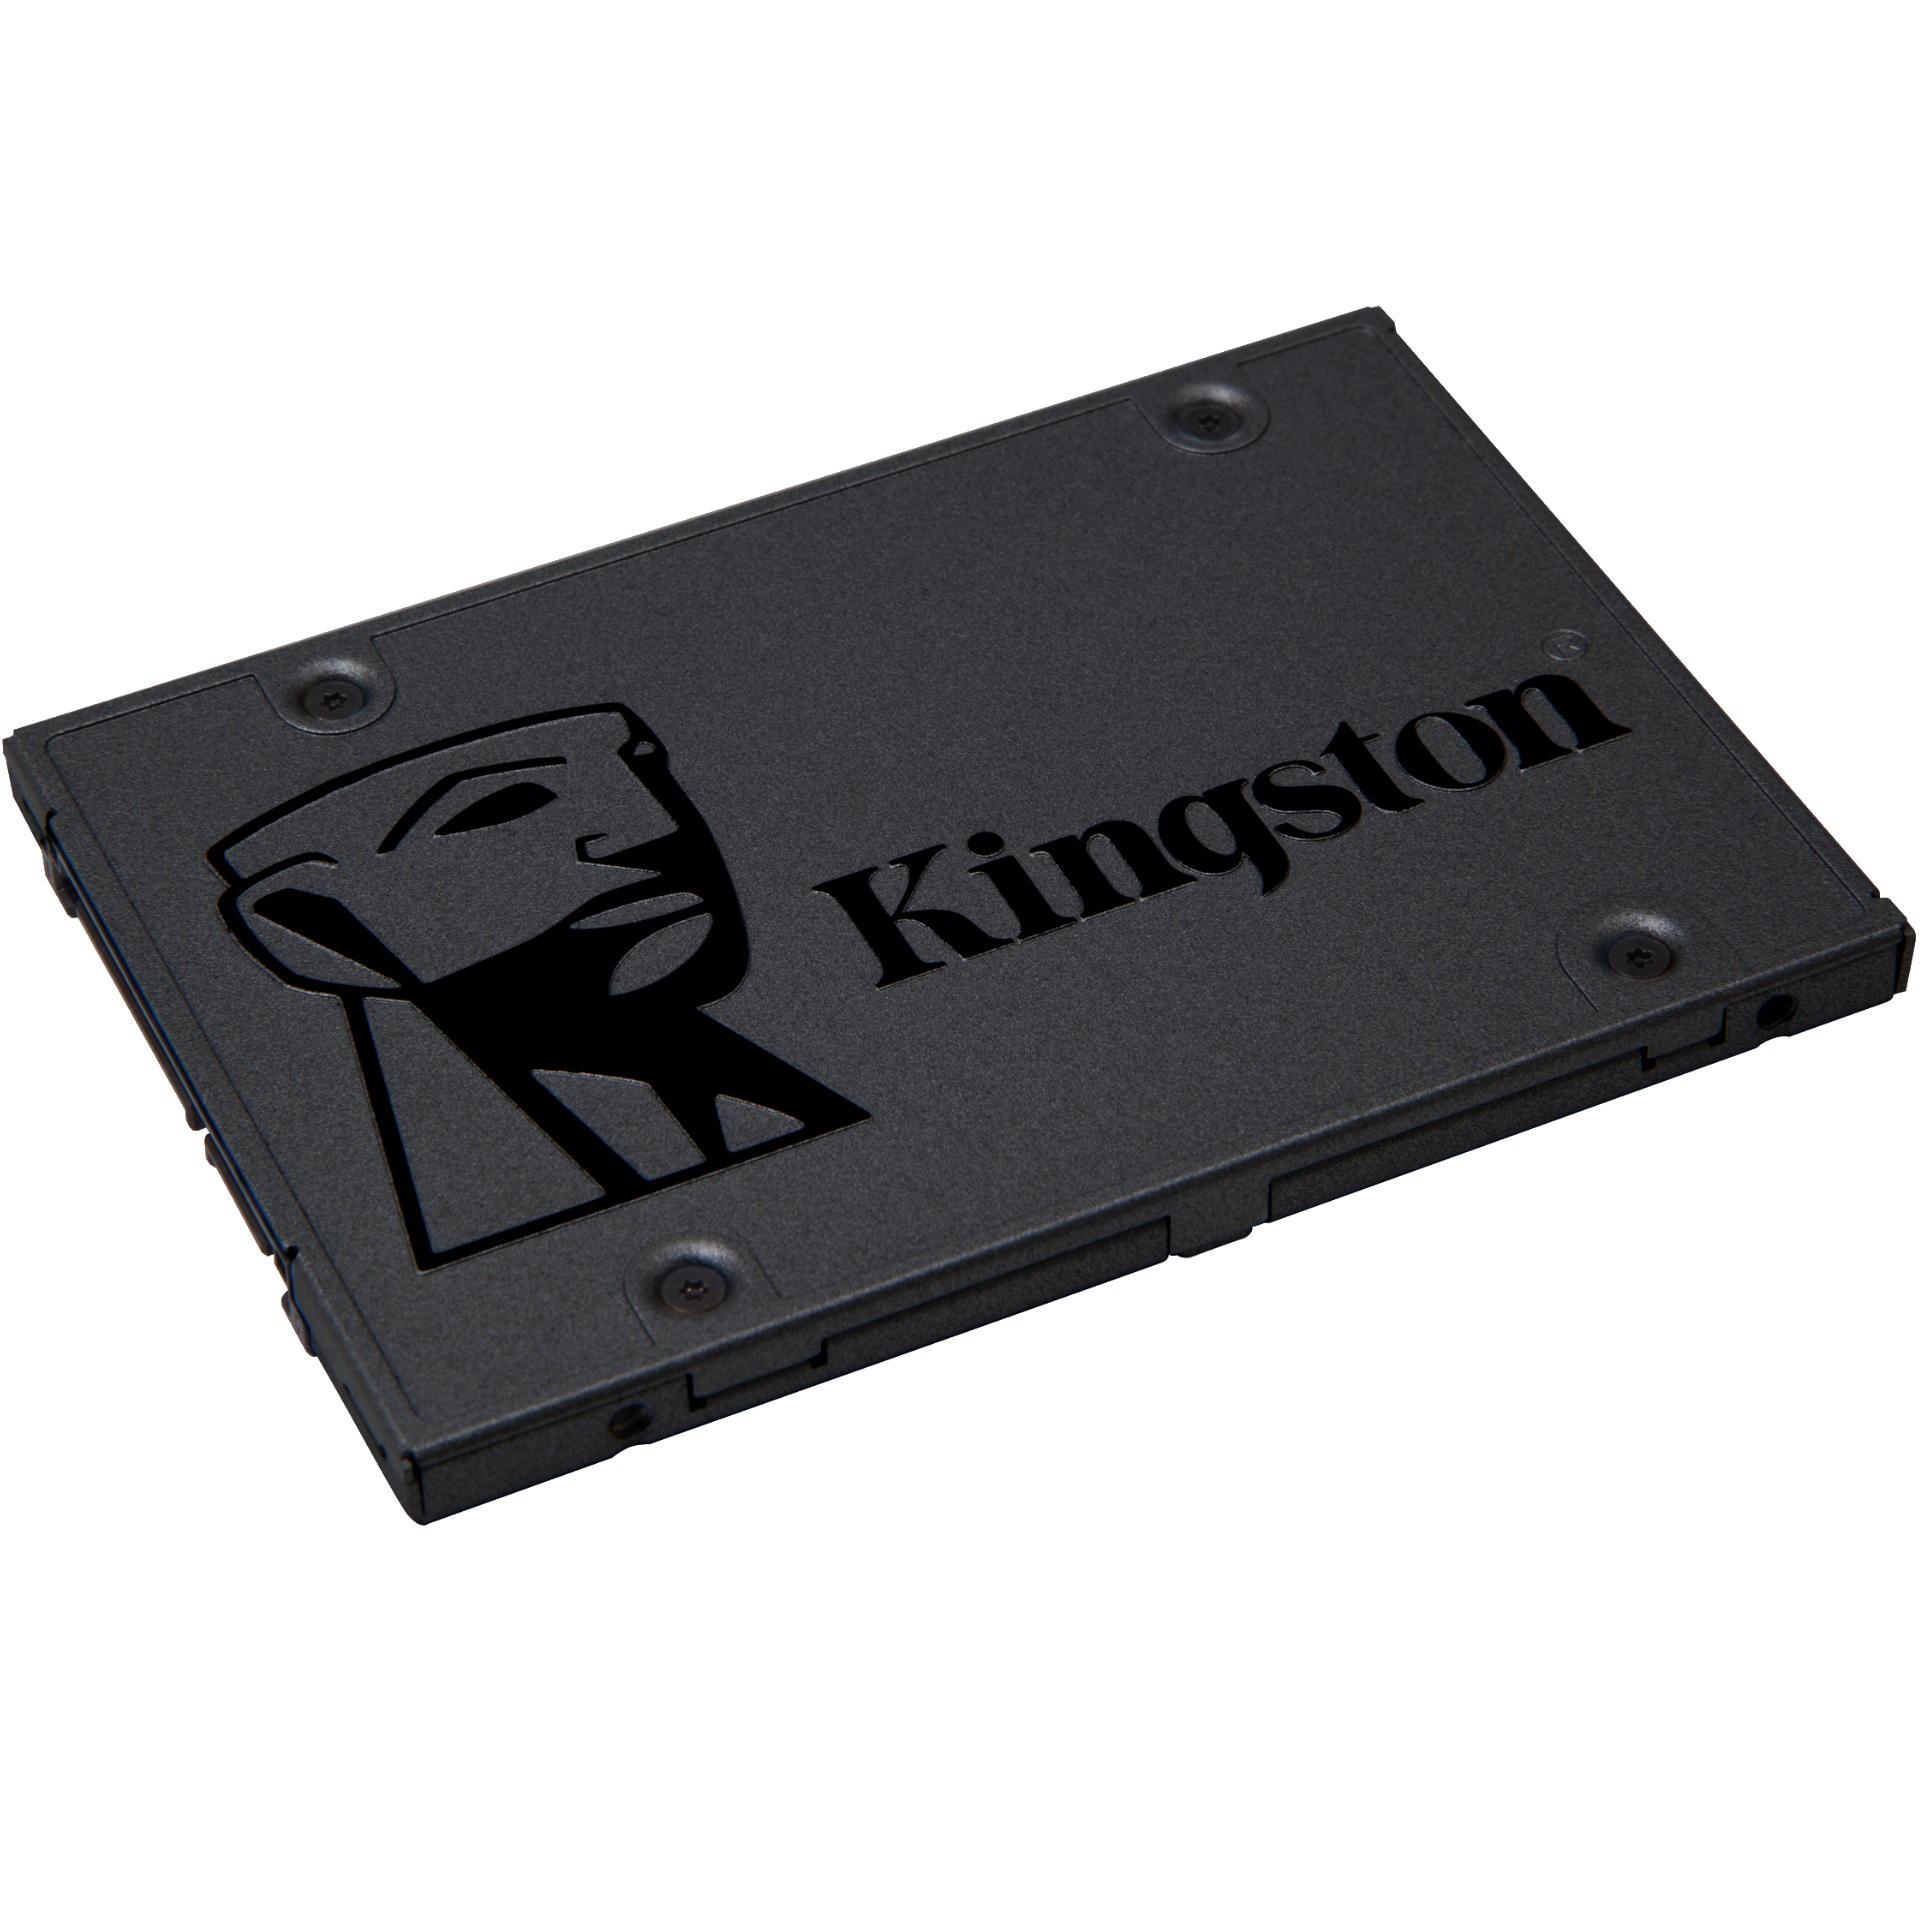 Kingston A400 480GB SATA 6Gb/s 2.5" Solid State Hard Drive - (SA400S37/480G)